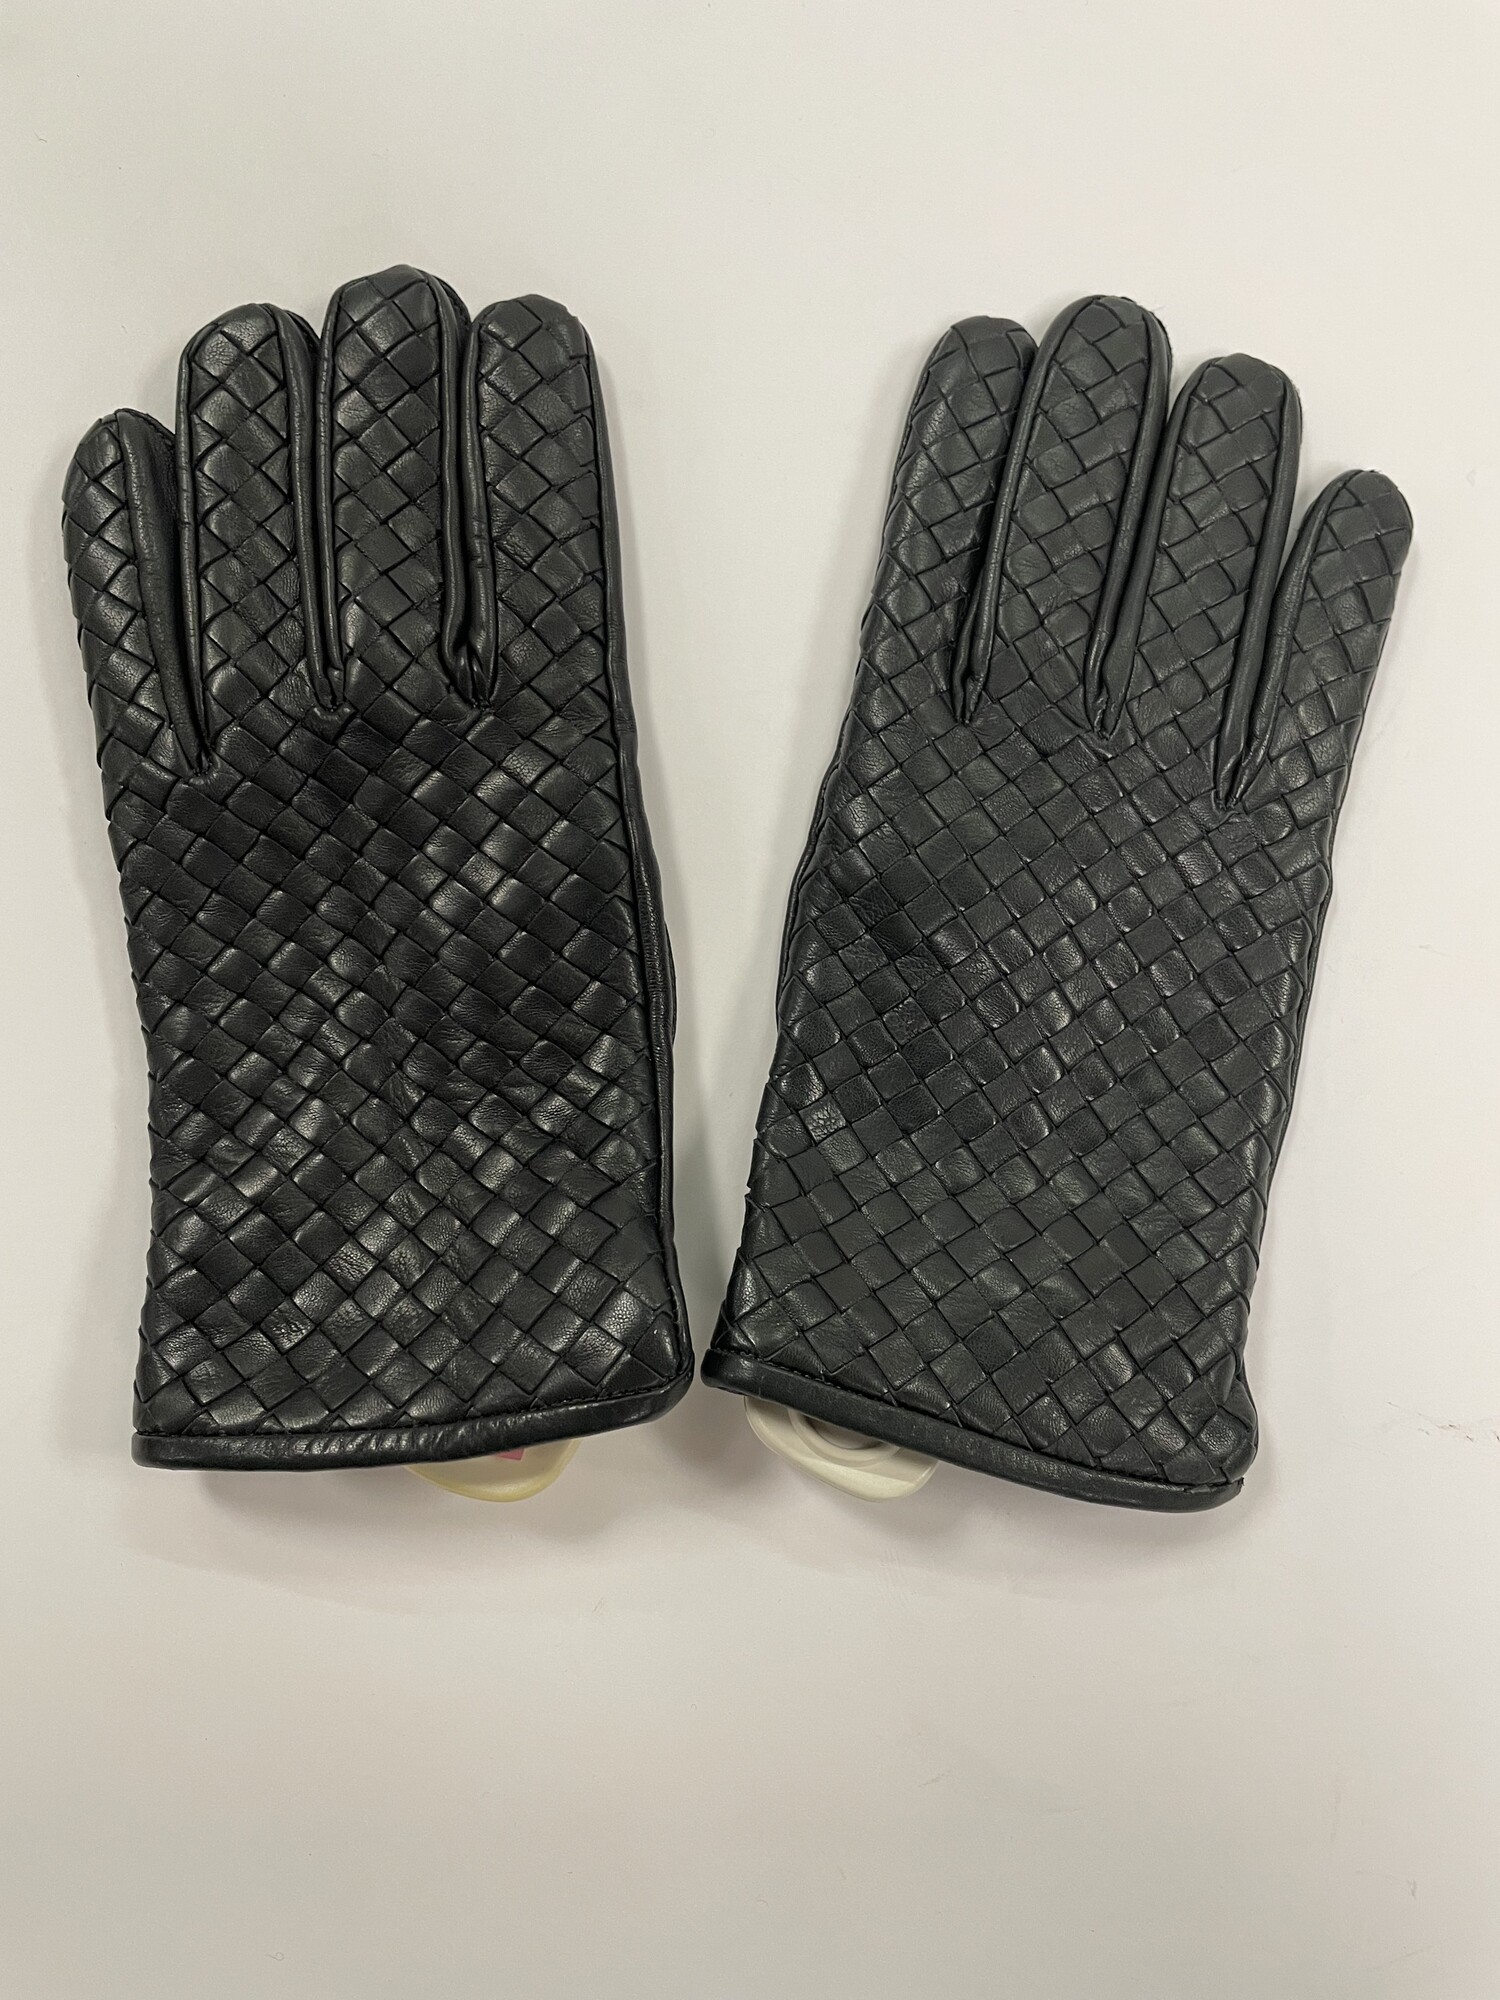 Bottega Veneta:   Mens Designer Gloves, Classic Bottega weave in Navy, Size: M/ L.  These gloves scream softness and class!